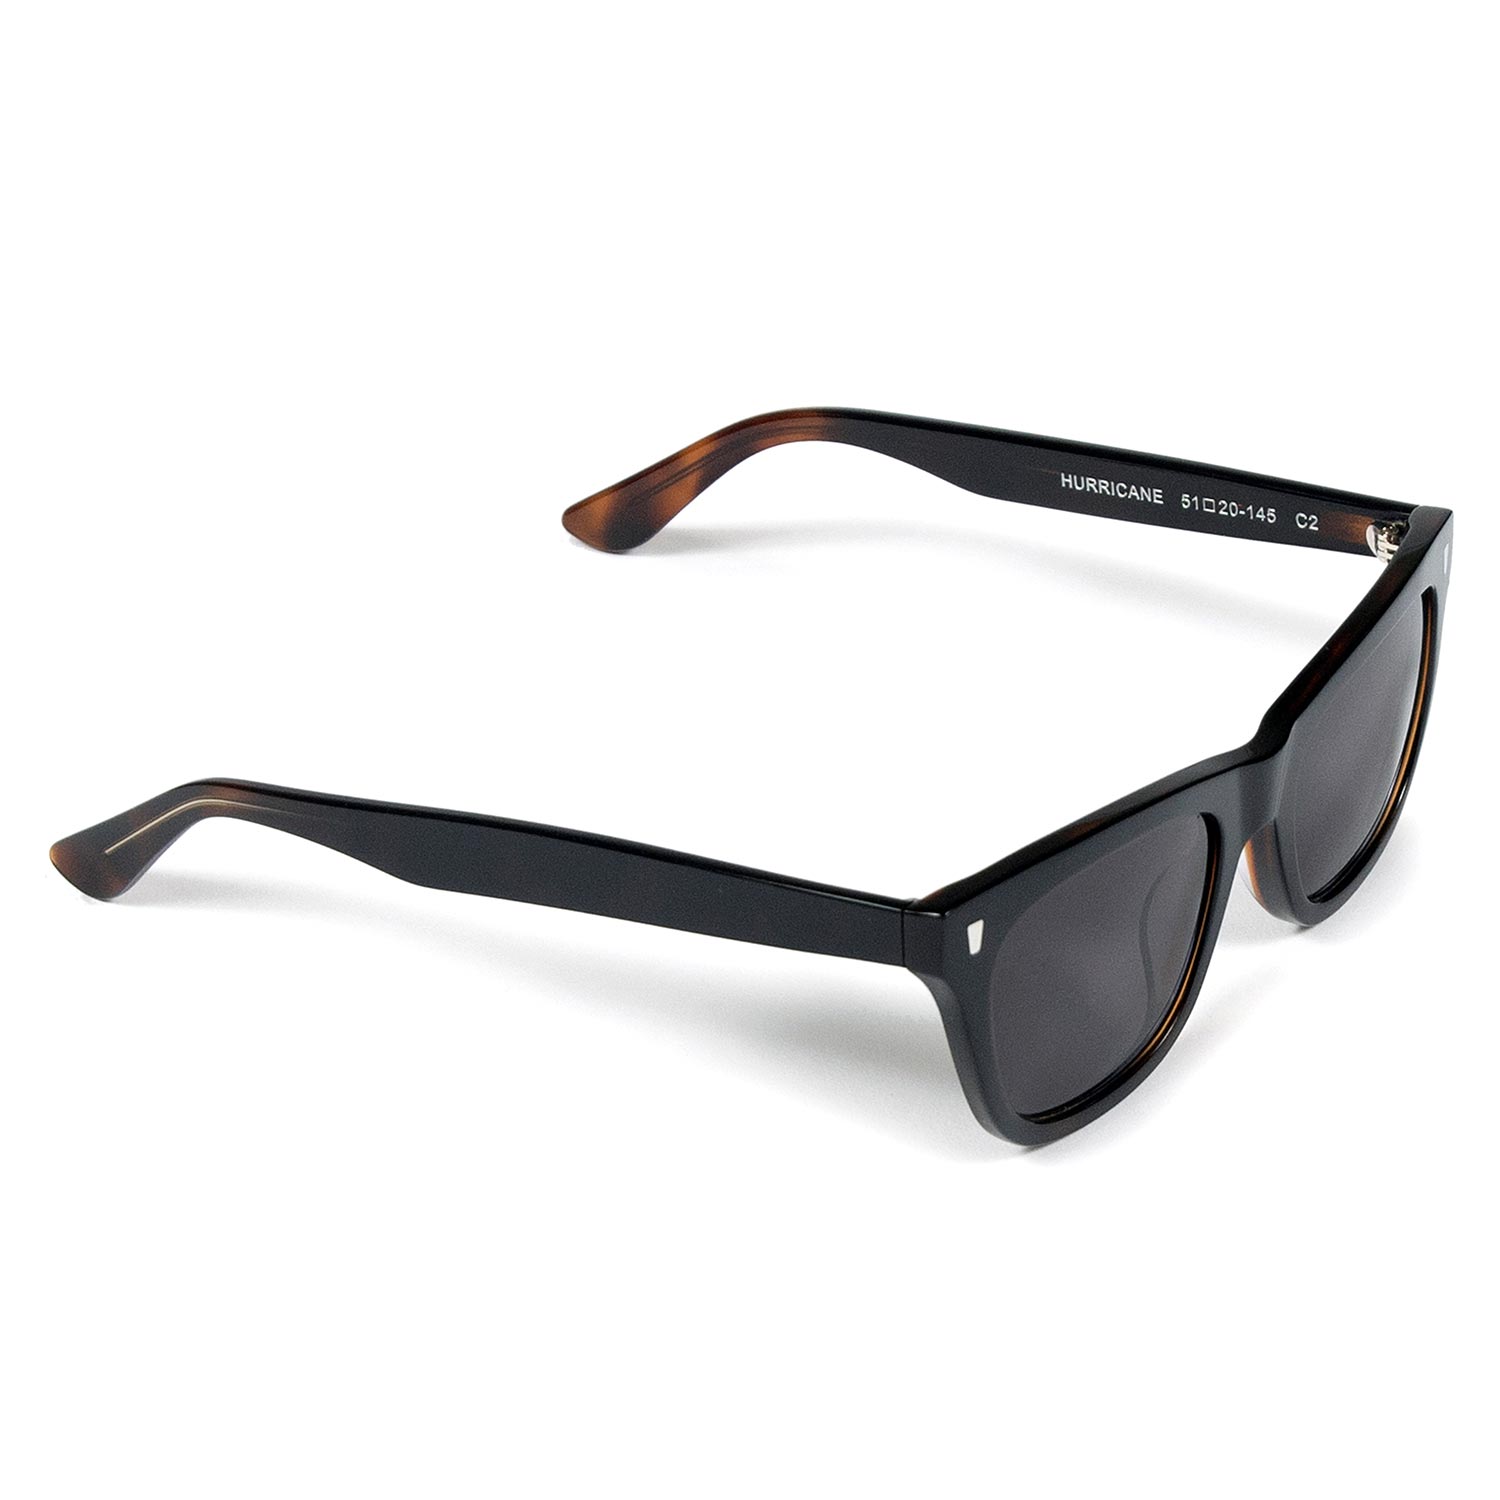 Detour Sunglasses - All Hurricane and Breezy frames are 60% off